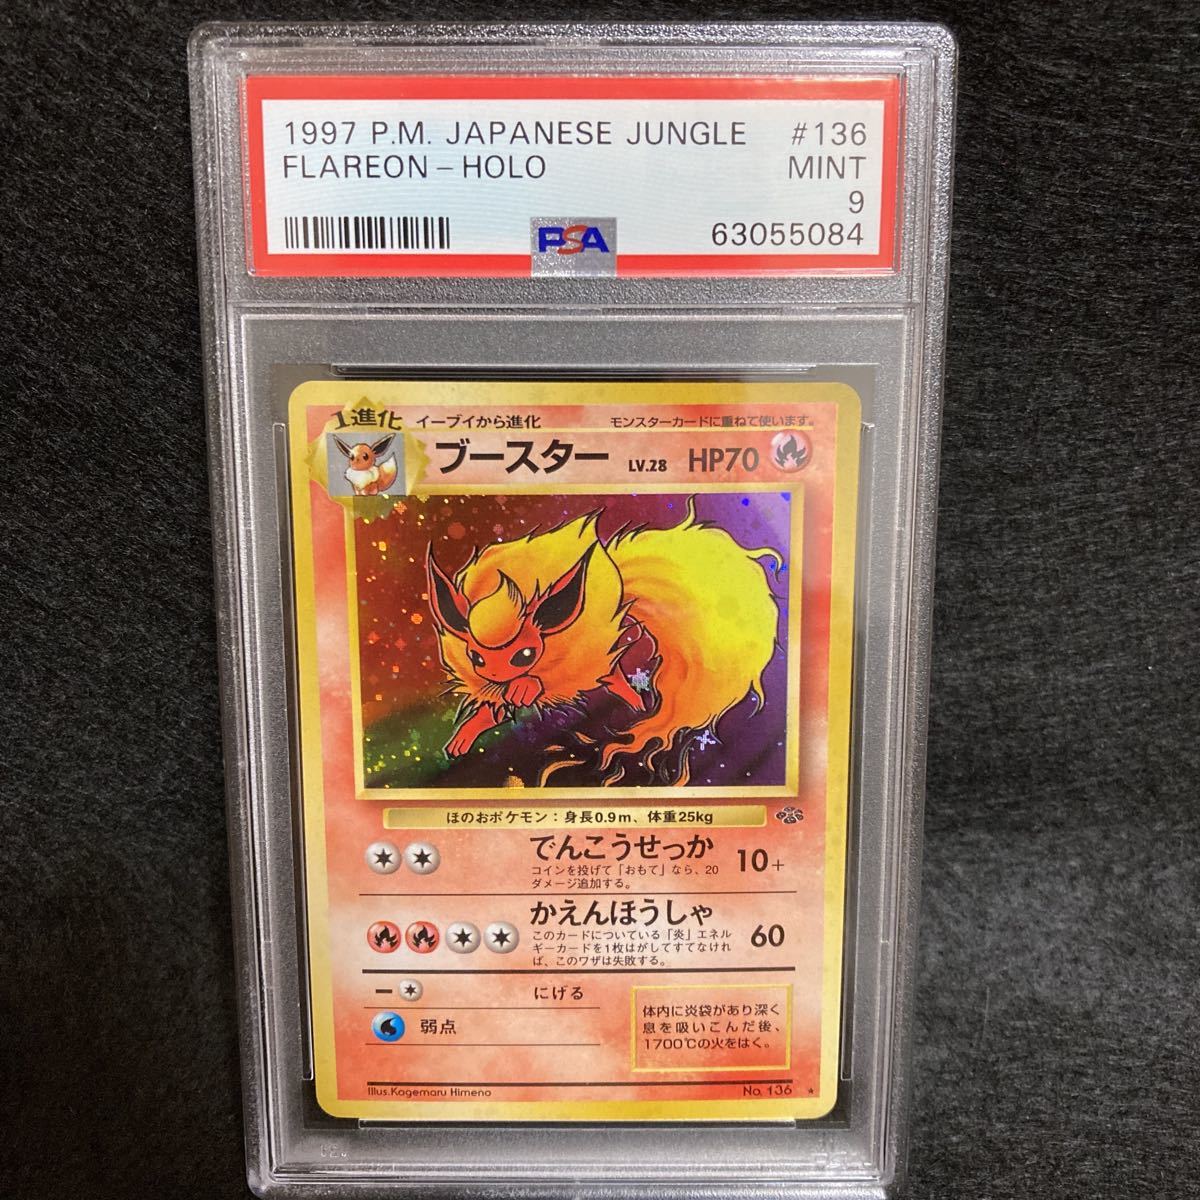 1997 Pokemon Japanese Jungle Flareon Holo #136 PSA 9 Mint